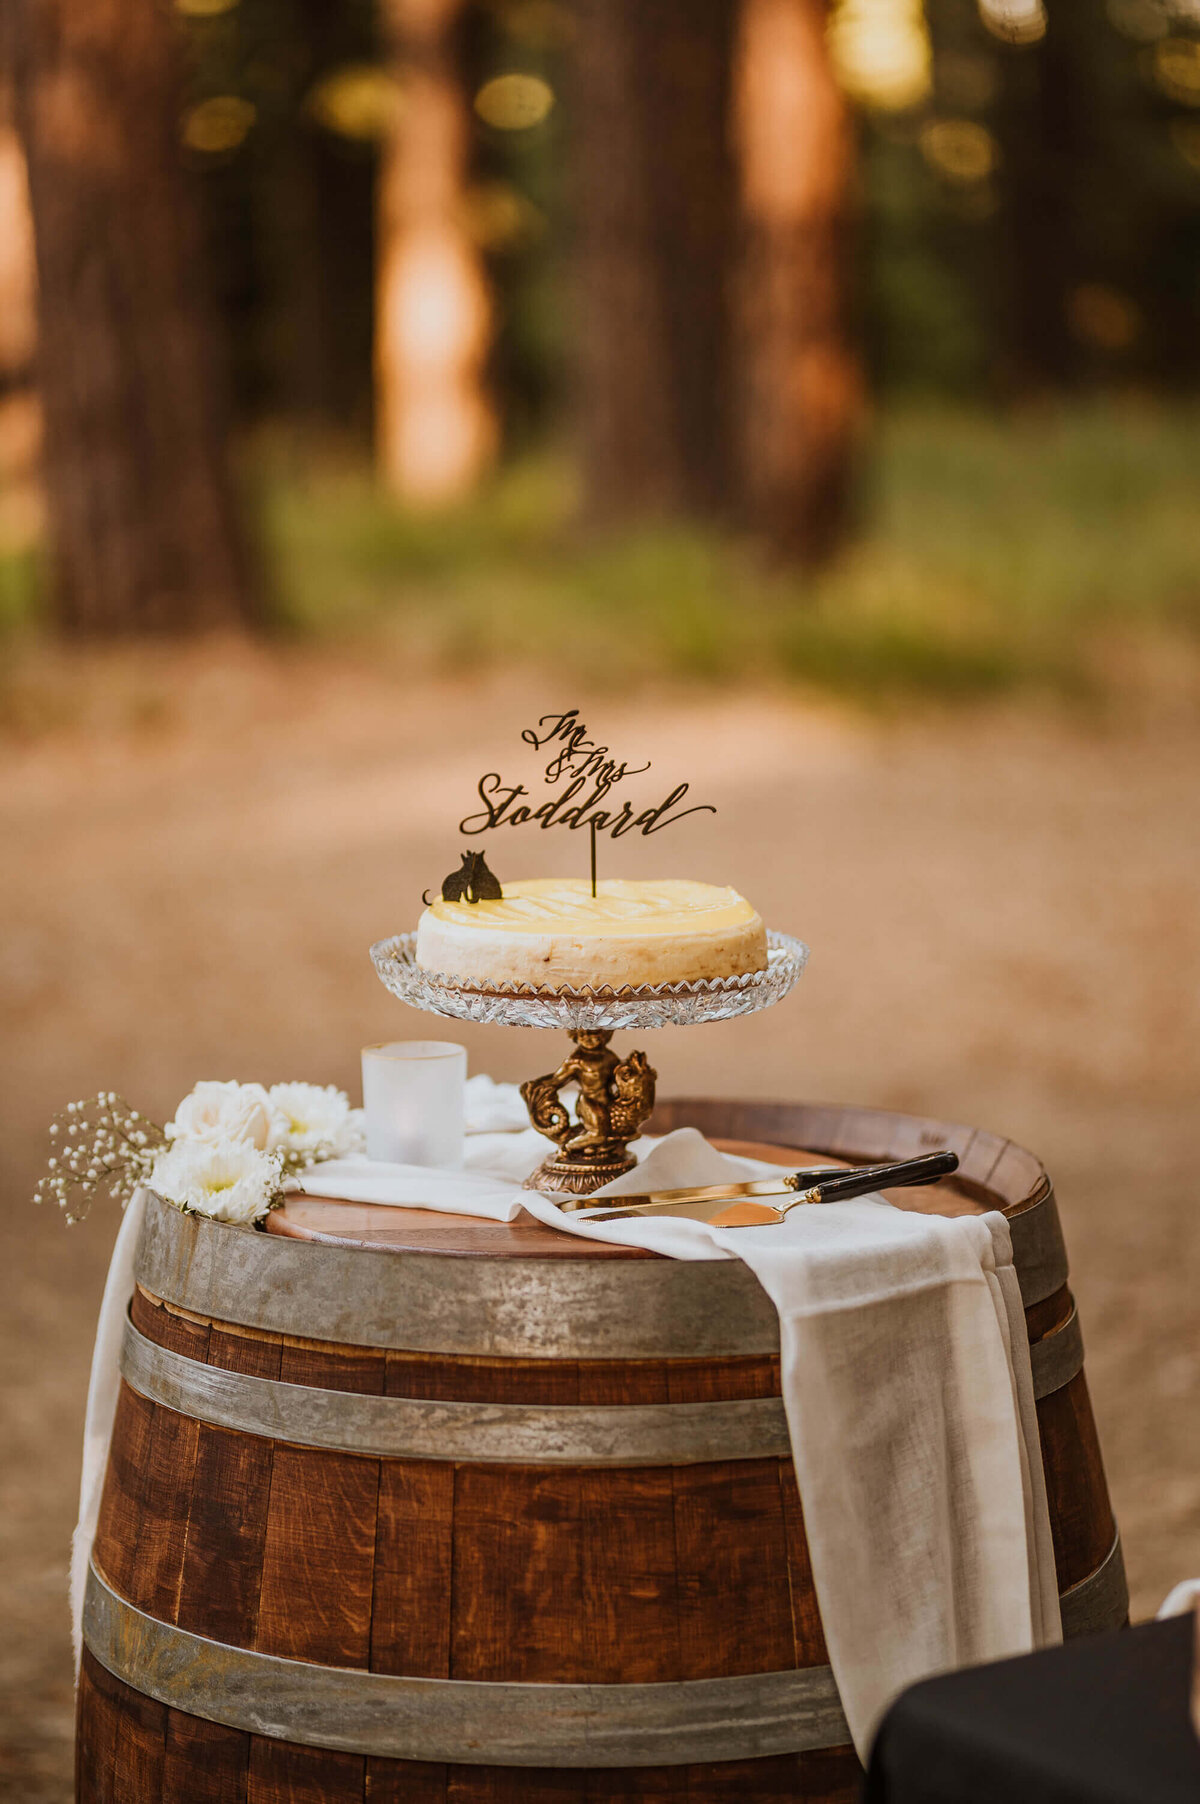 A wedding cake in Tahoe California.